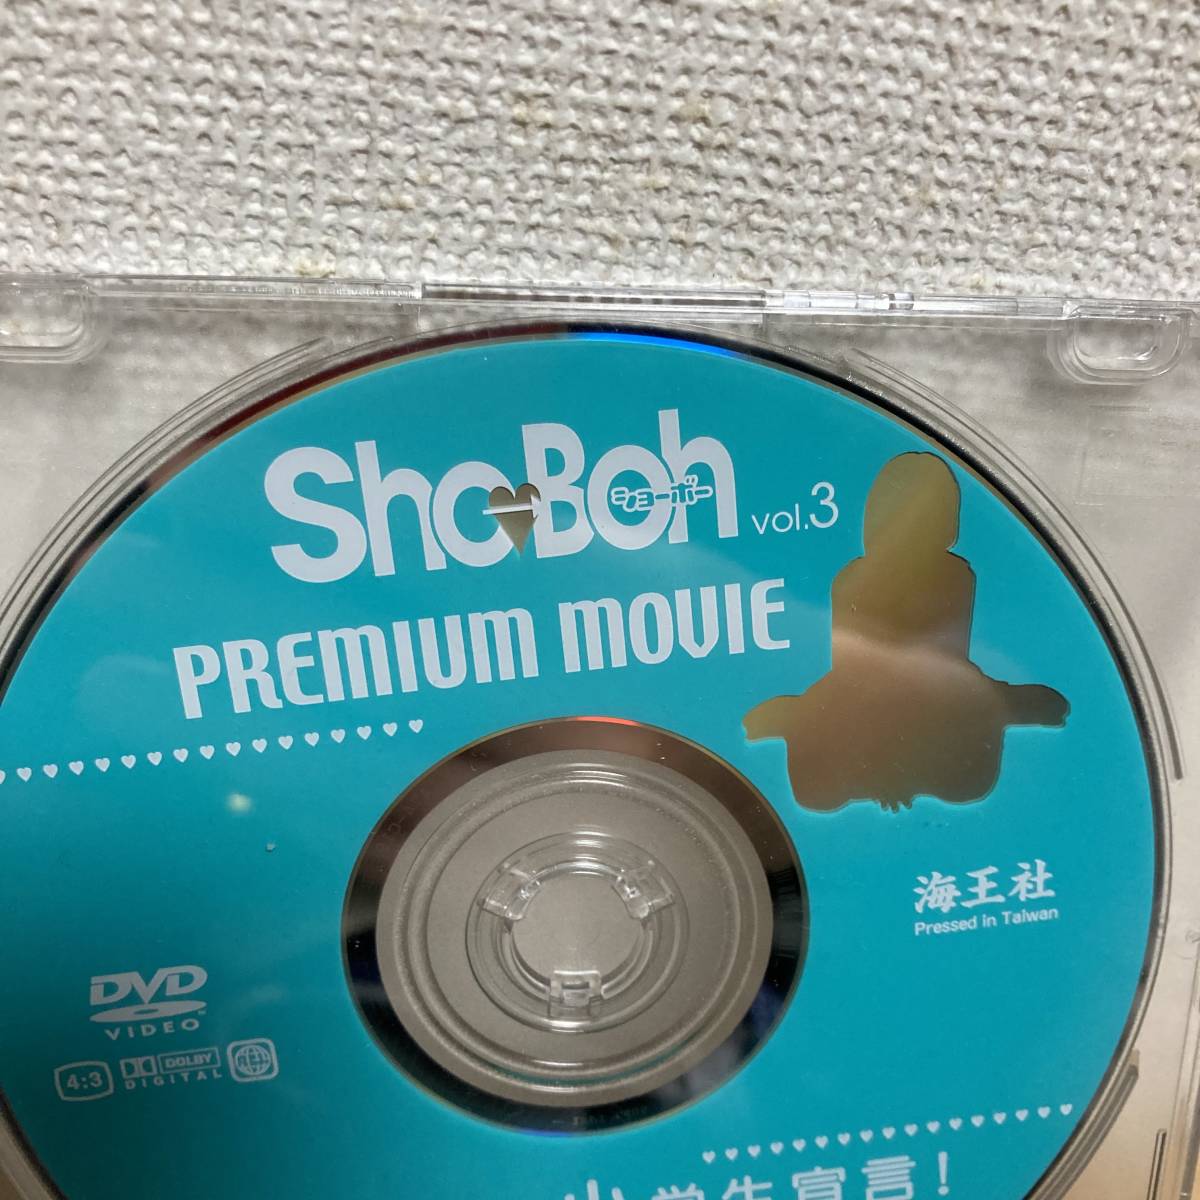 Sho-boh vol.3（雑誌付録DVDのみ・） ショーボー chu-boh 美咲あい 愛永 葉月あい 石川楓子 ジュニアアイドル